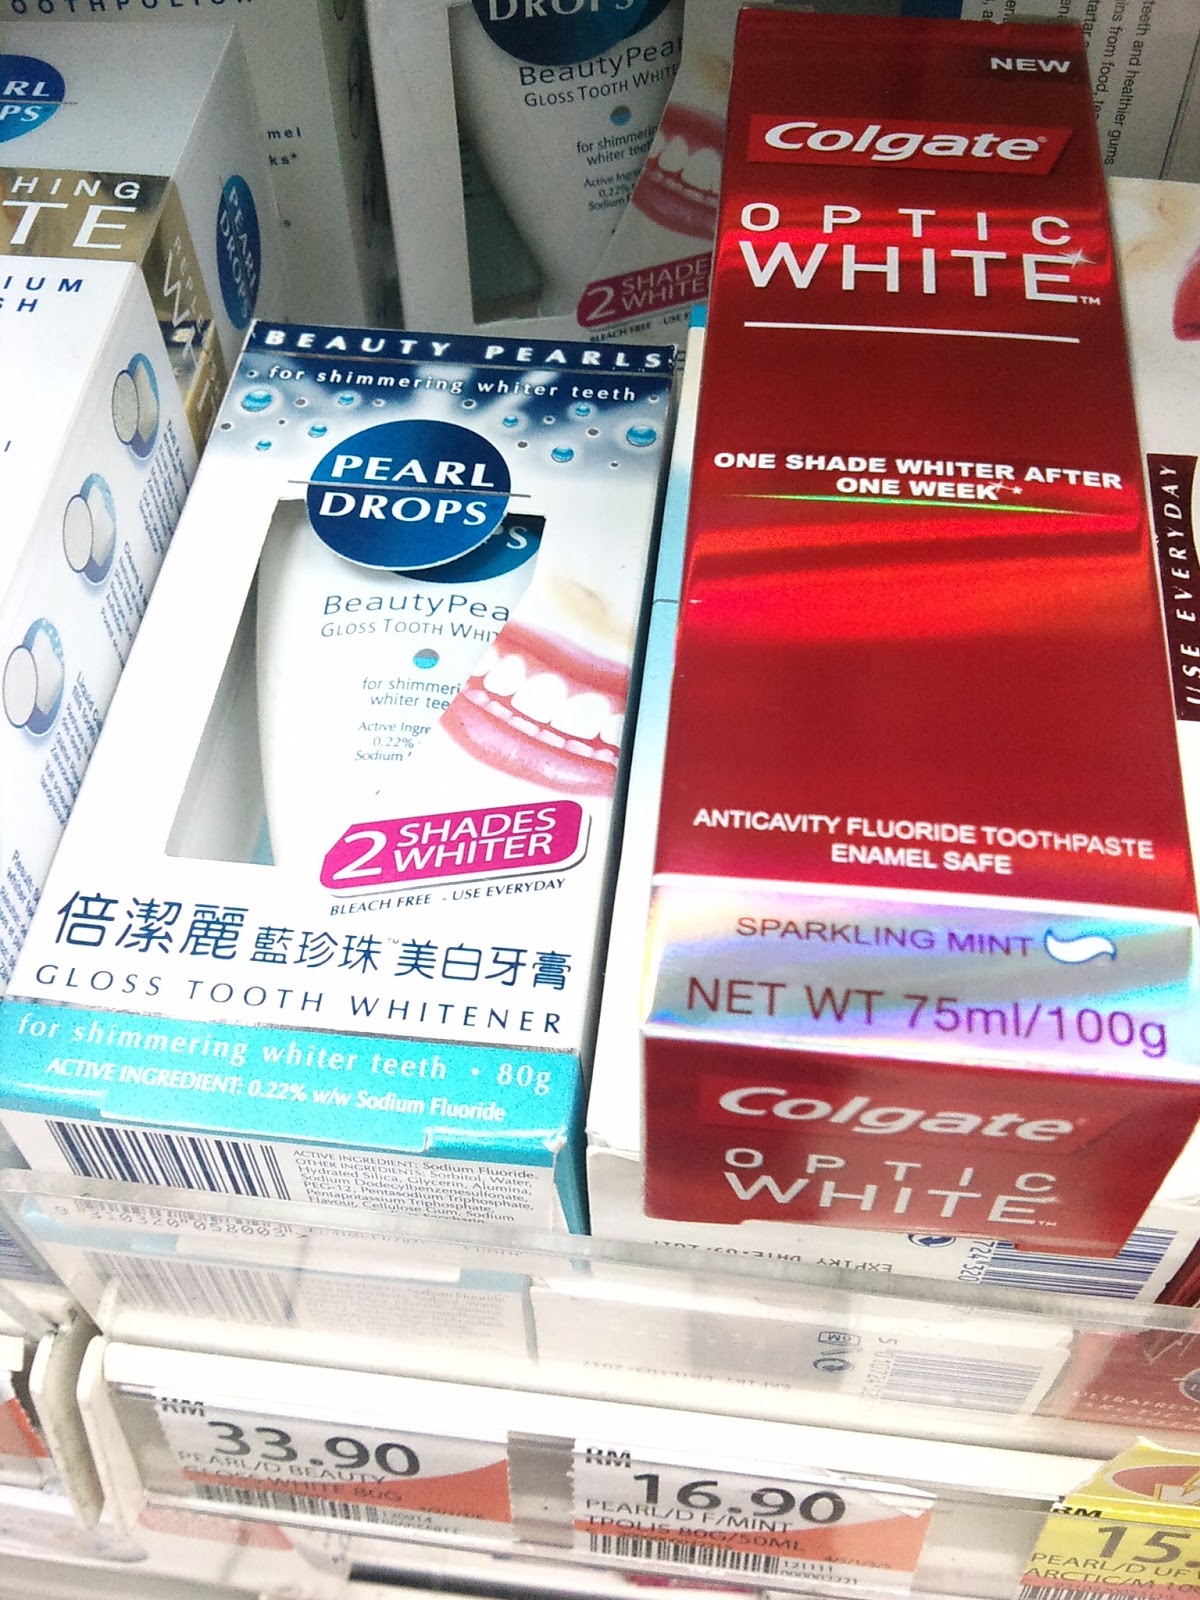 A pale-berry: Macam mana nak putihkan gigi? : Nah Try Ubat 